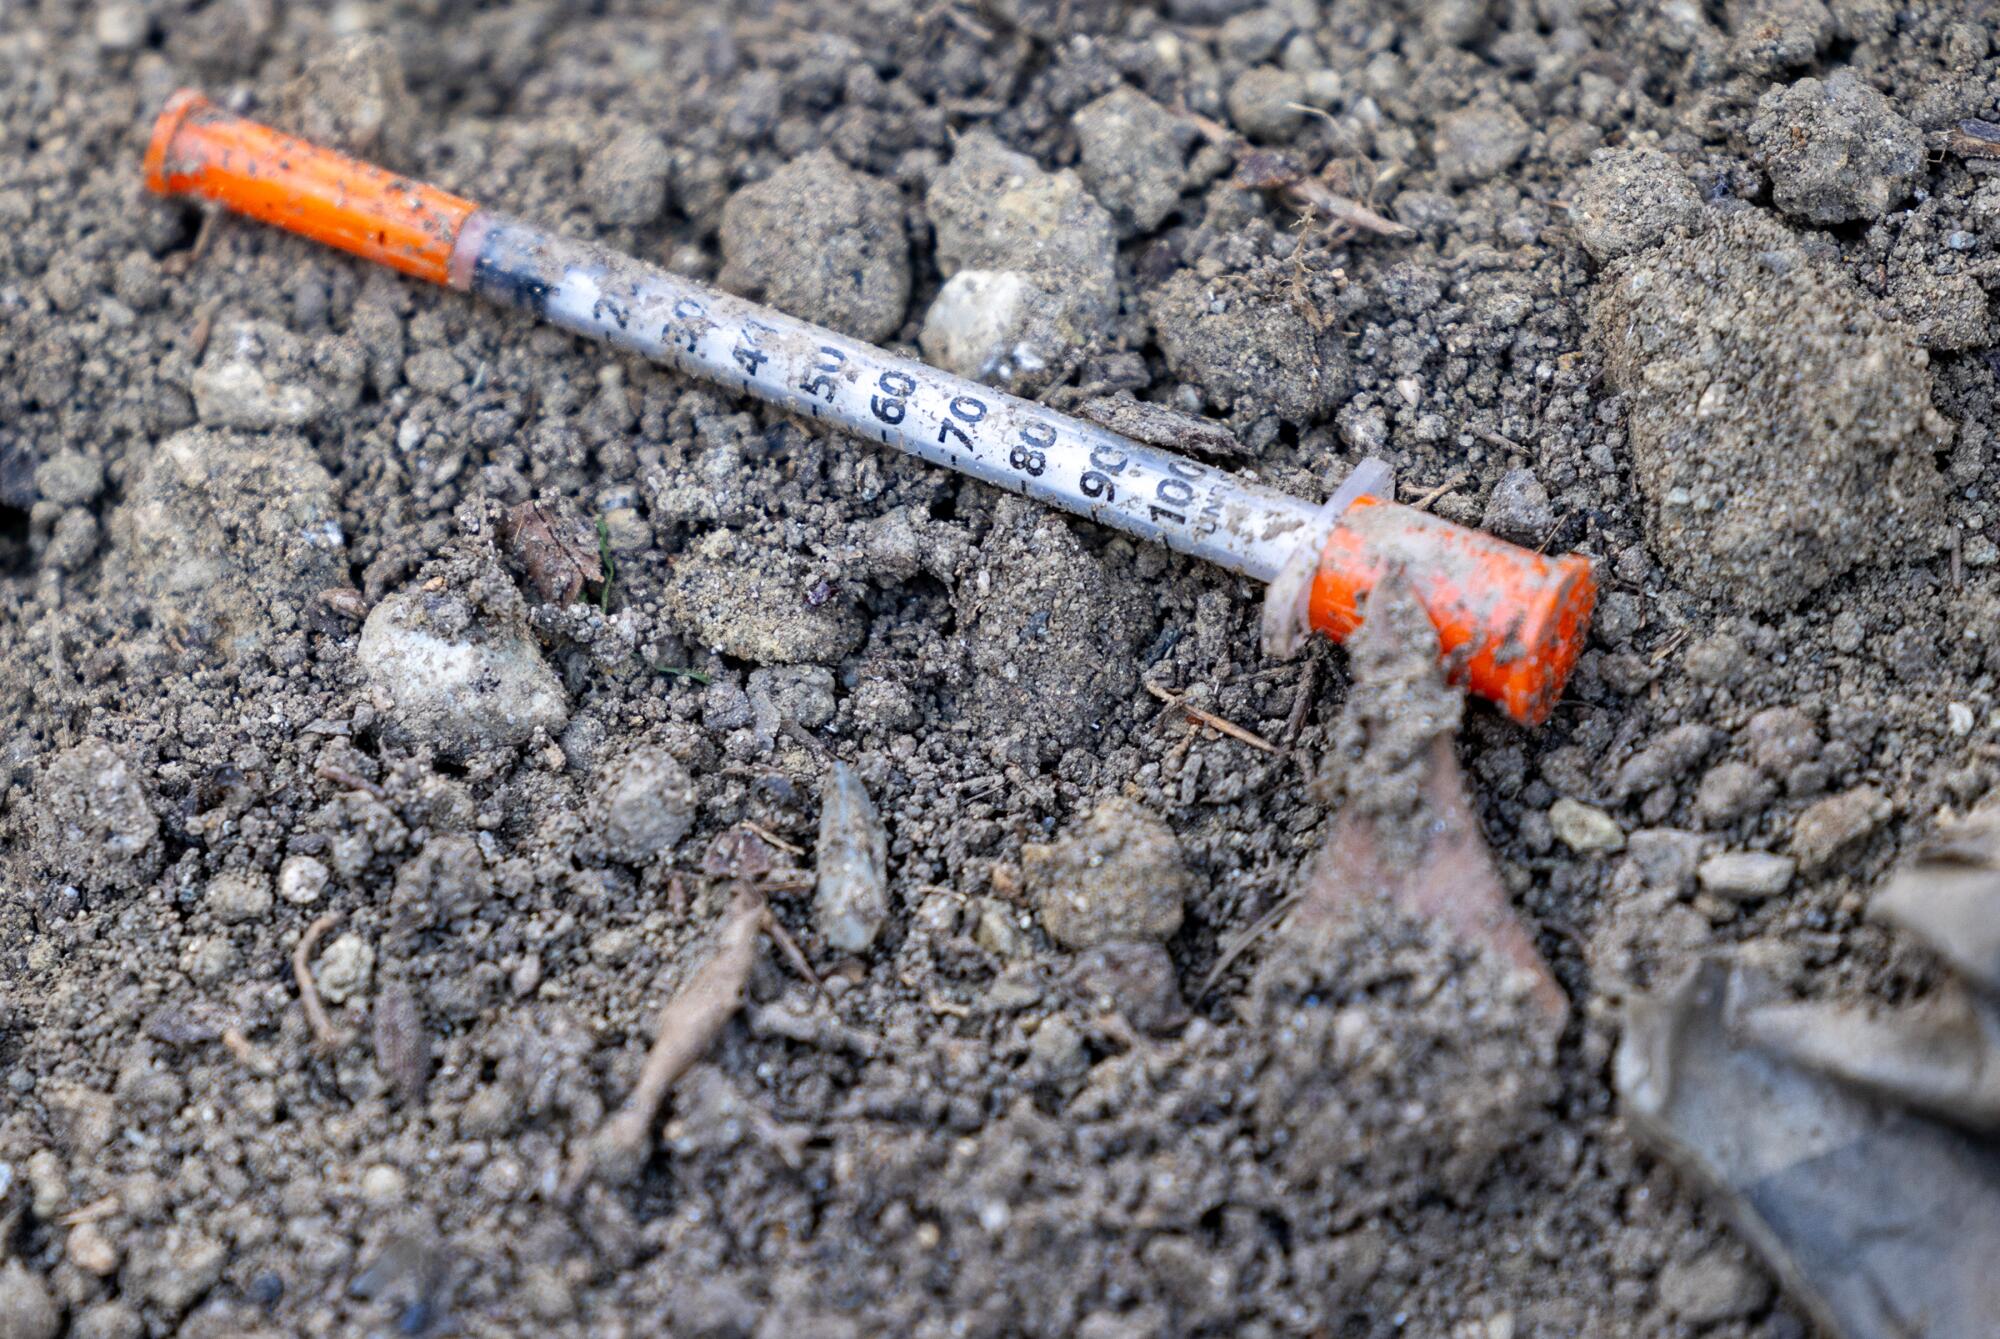 A syringe on the ground.